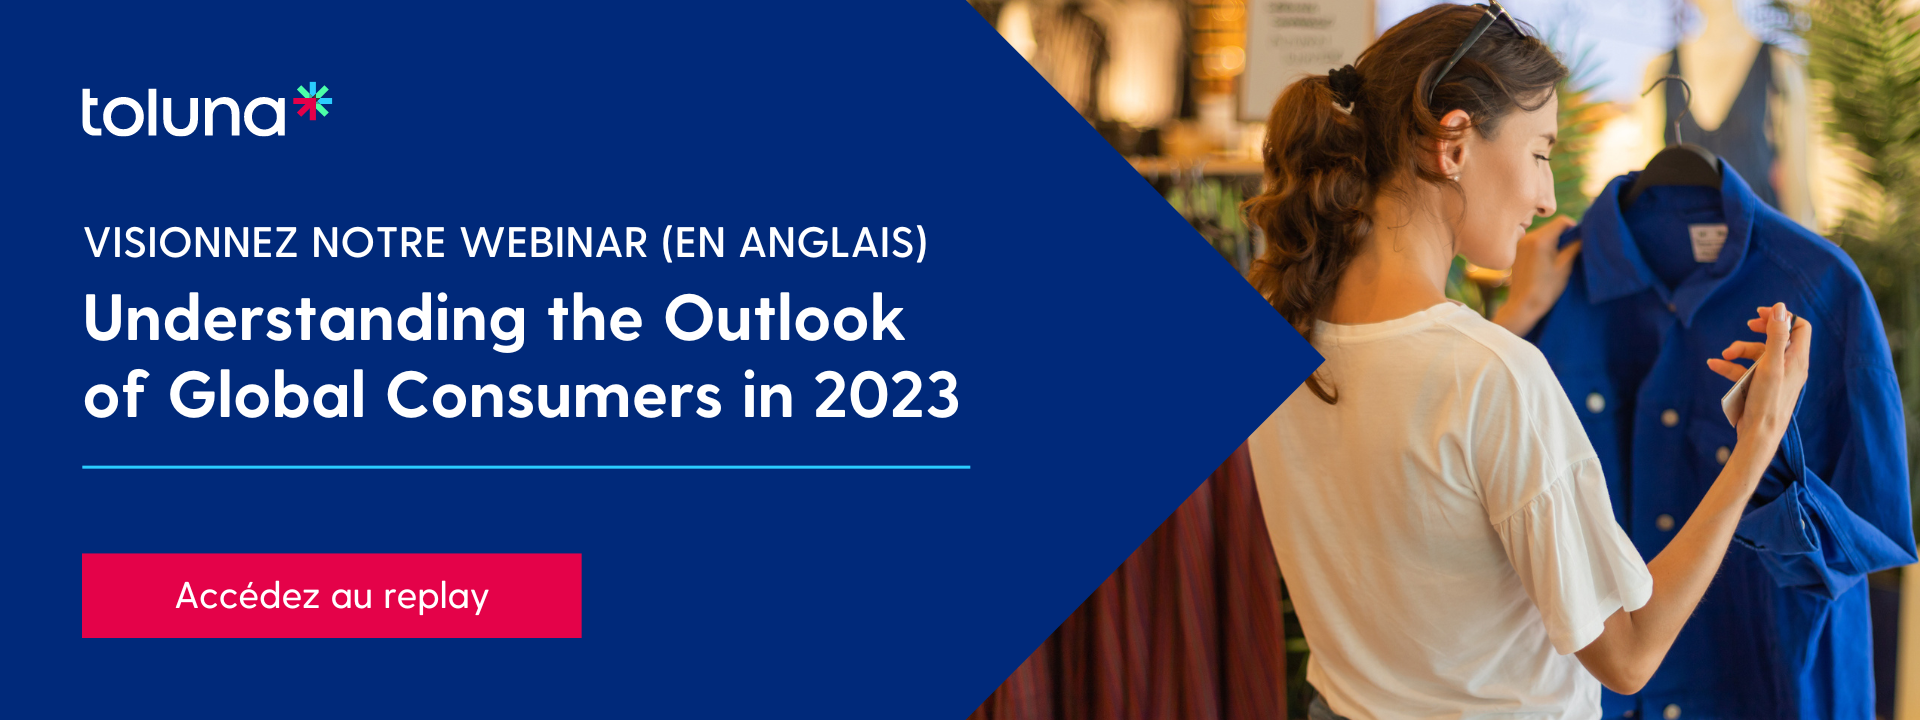 Visionnez le replay de notre webinar : Understanding the Outlook of Global Consumers in 2023 | Toluna